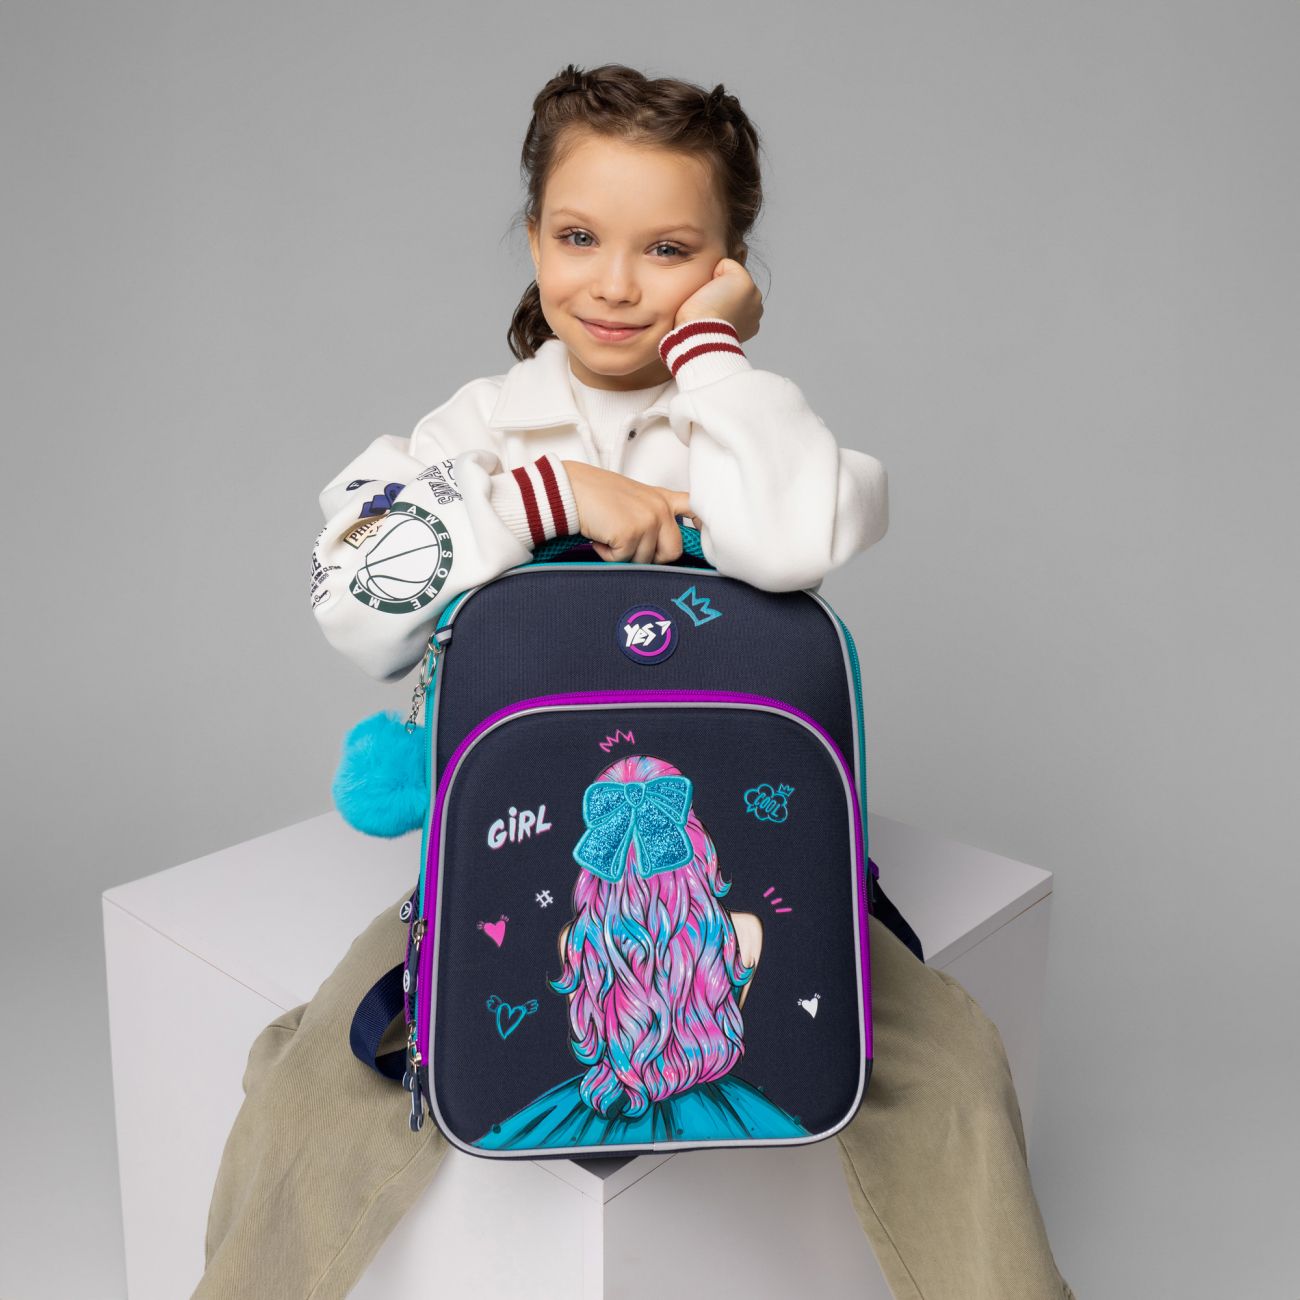 Рюкзак Yes S-78 Collection Cool Girl с пеналом и сумкой (559771) - фото 12